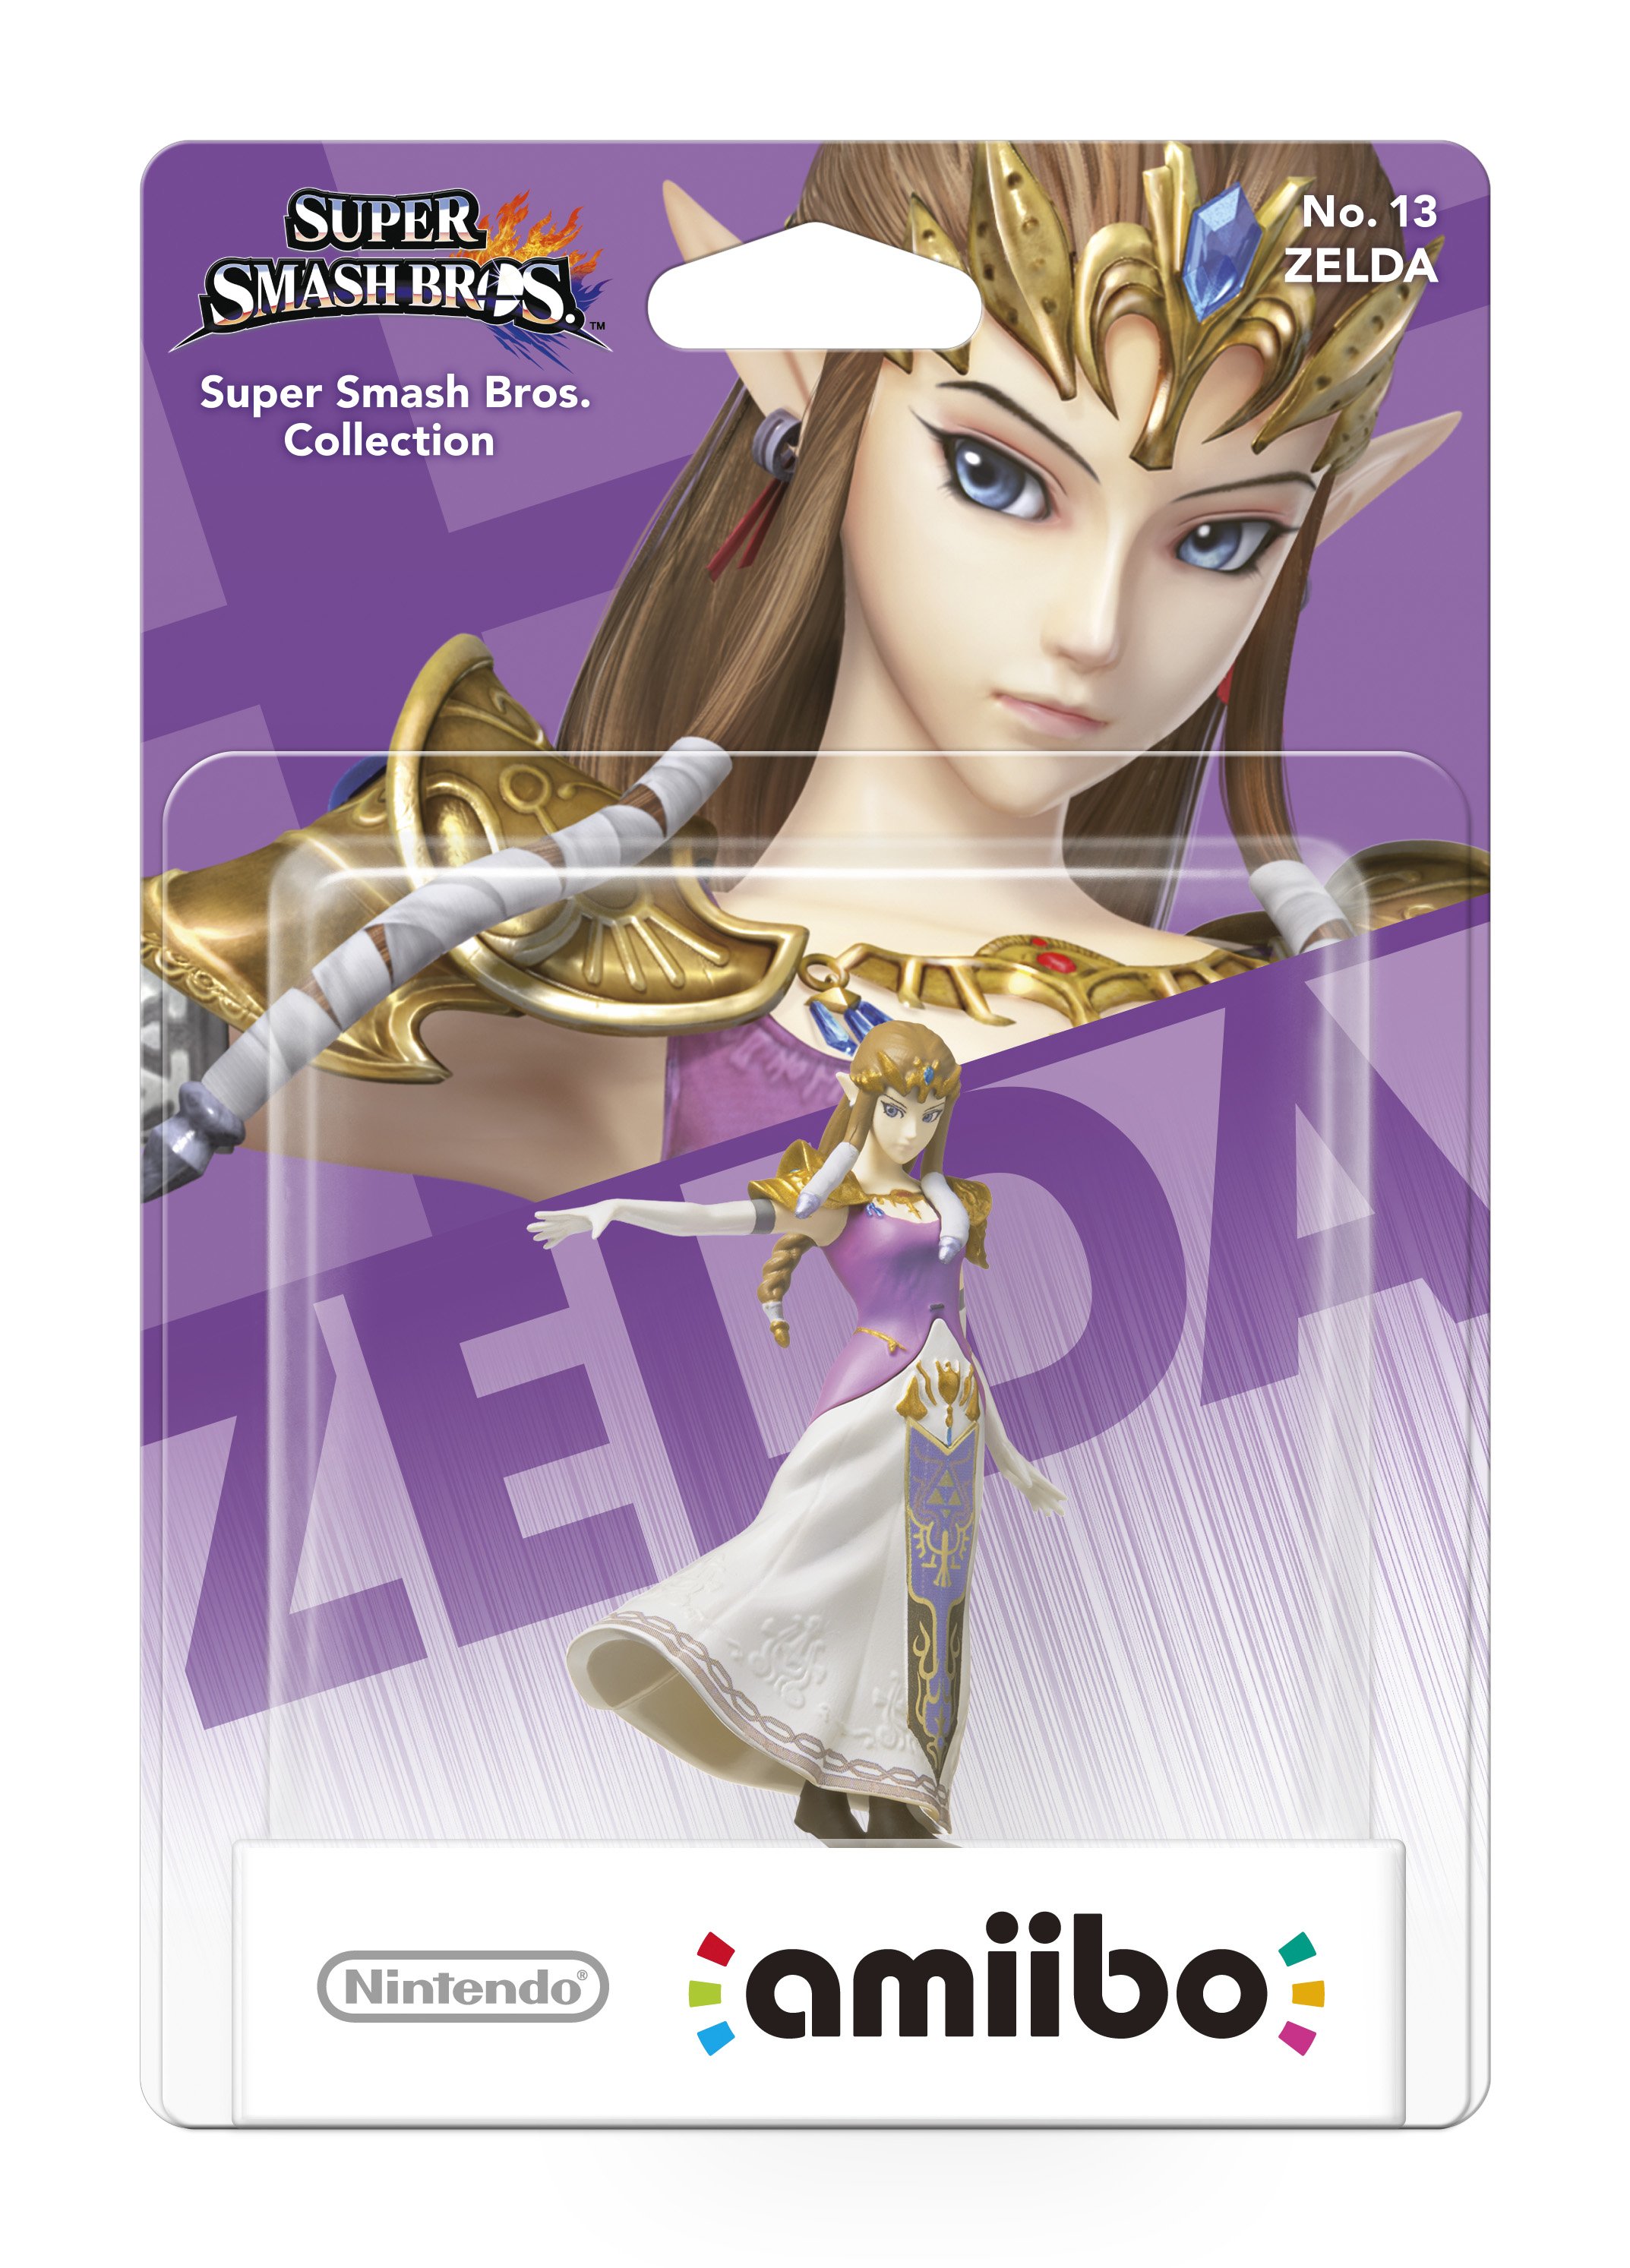 Buy Nintendo Amiibo Figurine Zelda (Super Smash Bros.)